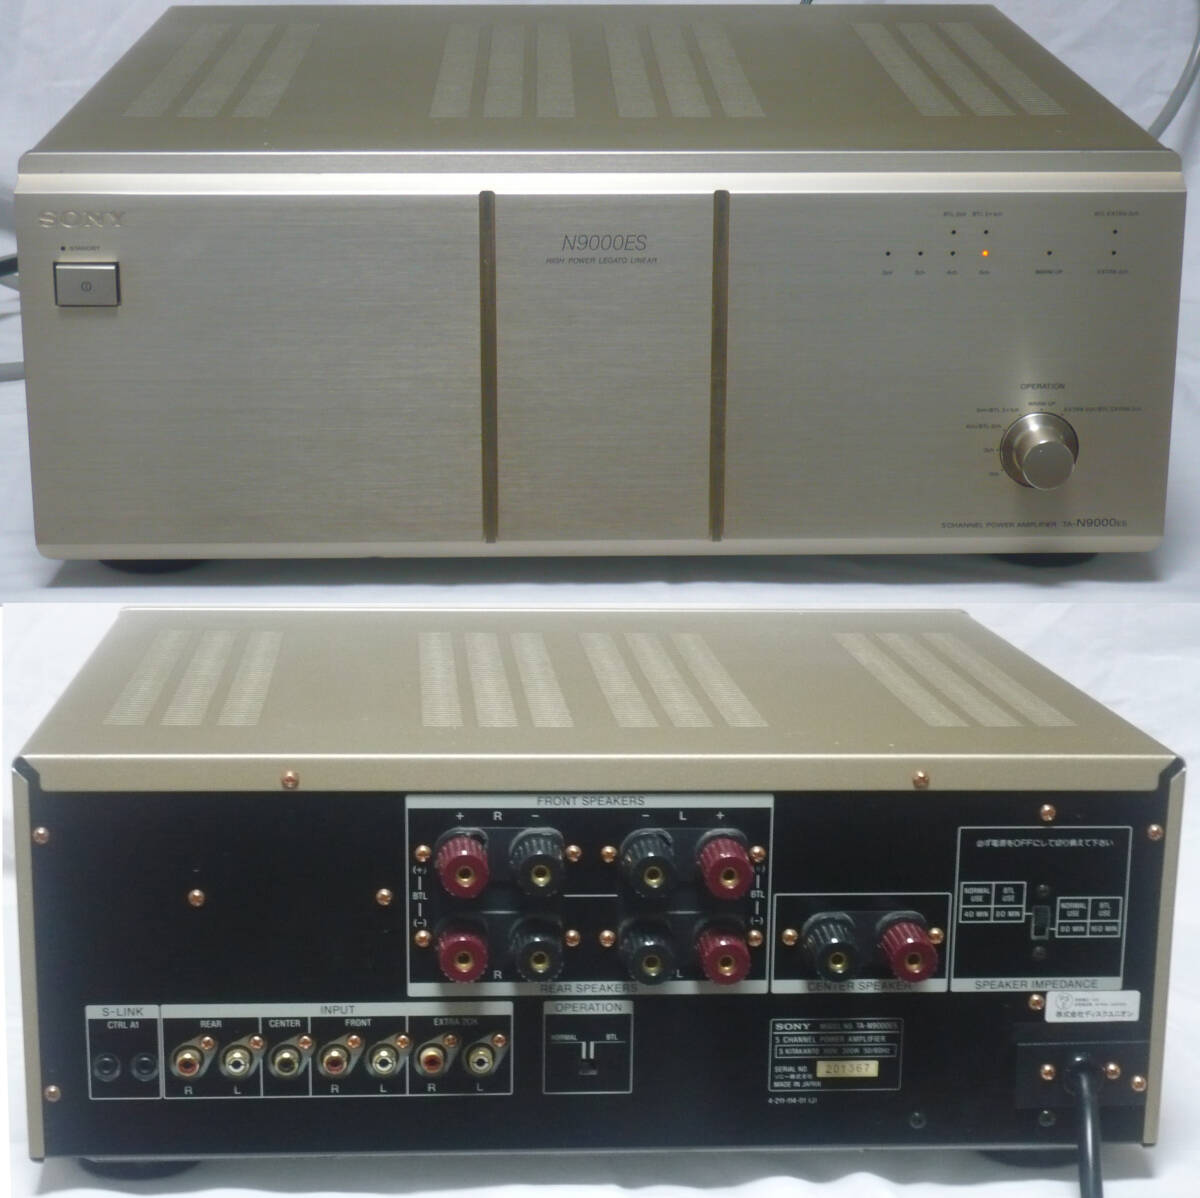 5CH power amplifier TA-N9000ES